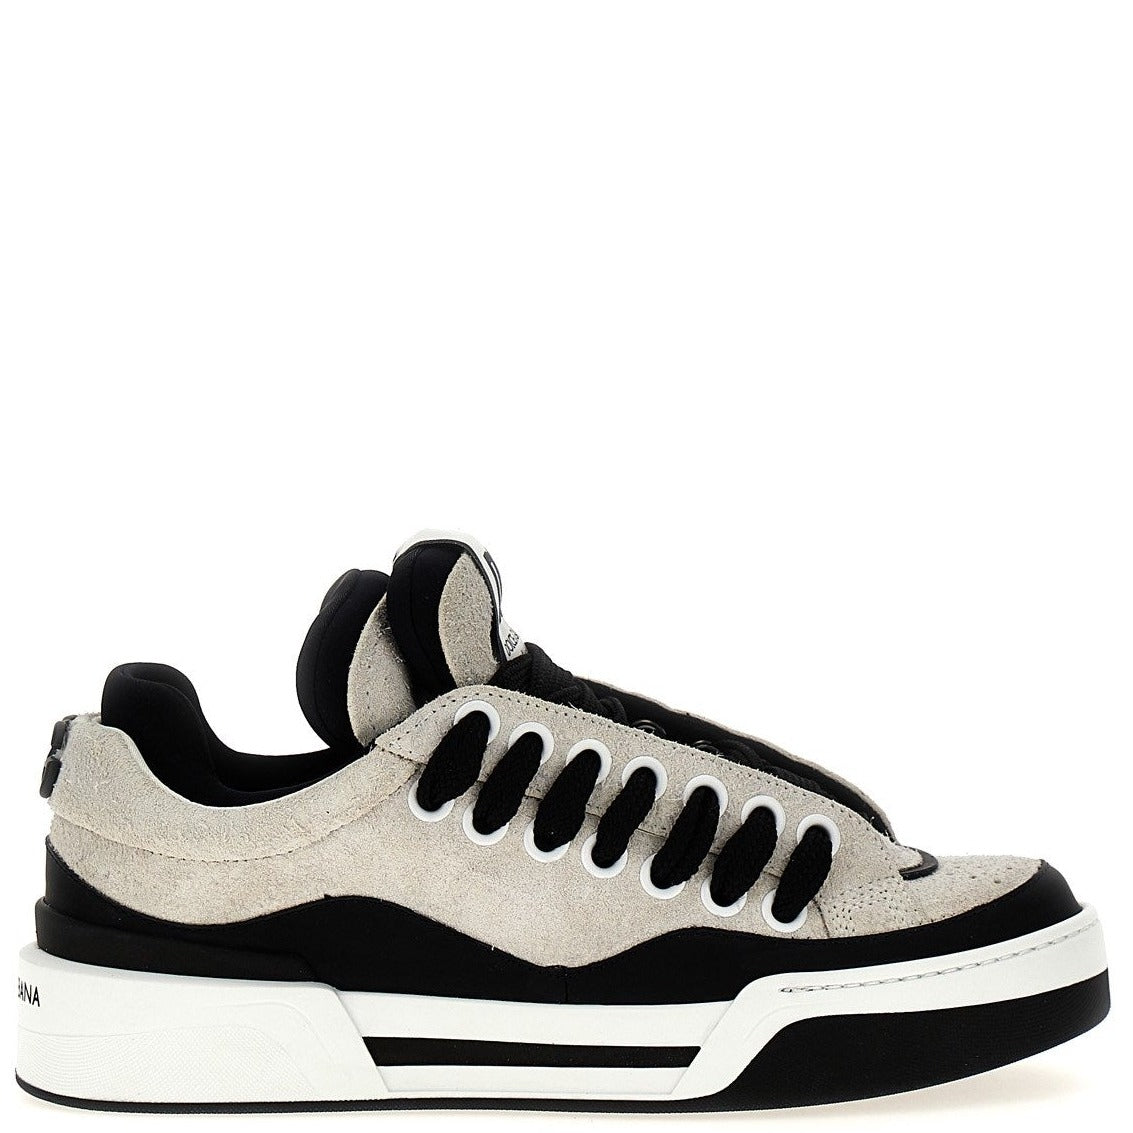 Dolce & gabbana 'new roma' sneakers white/black